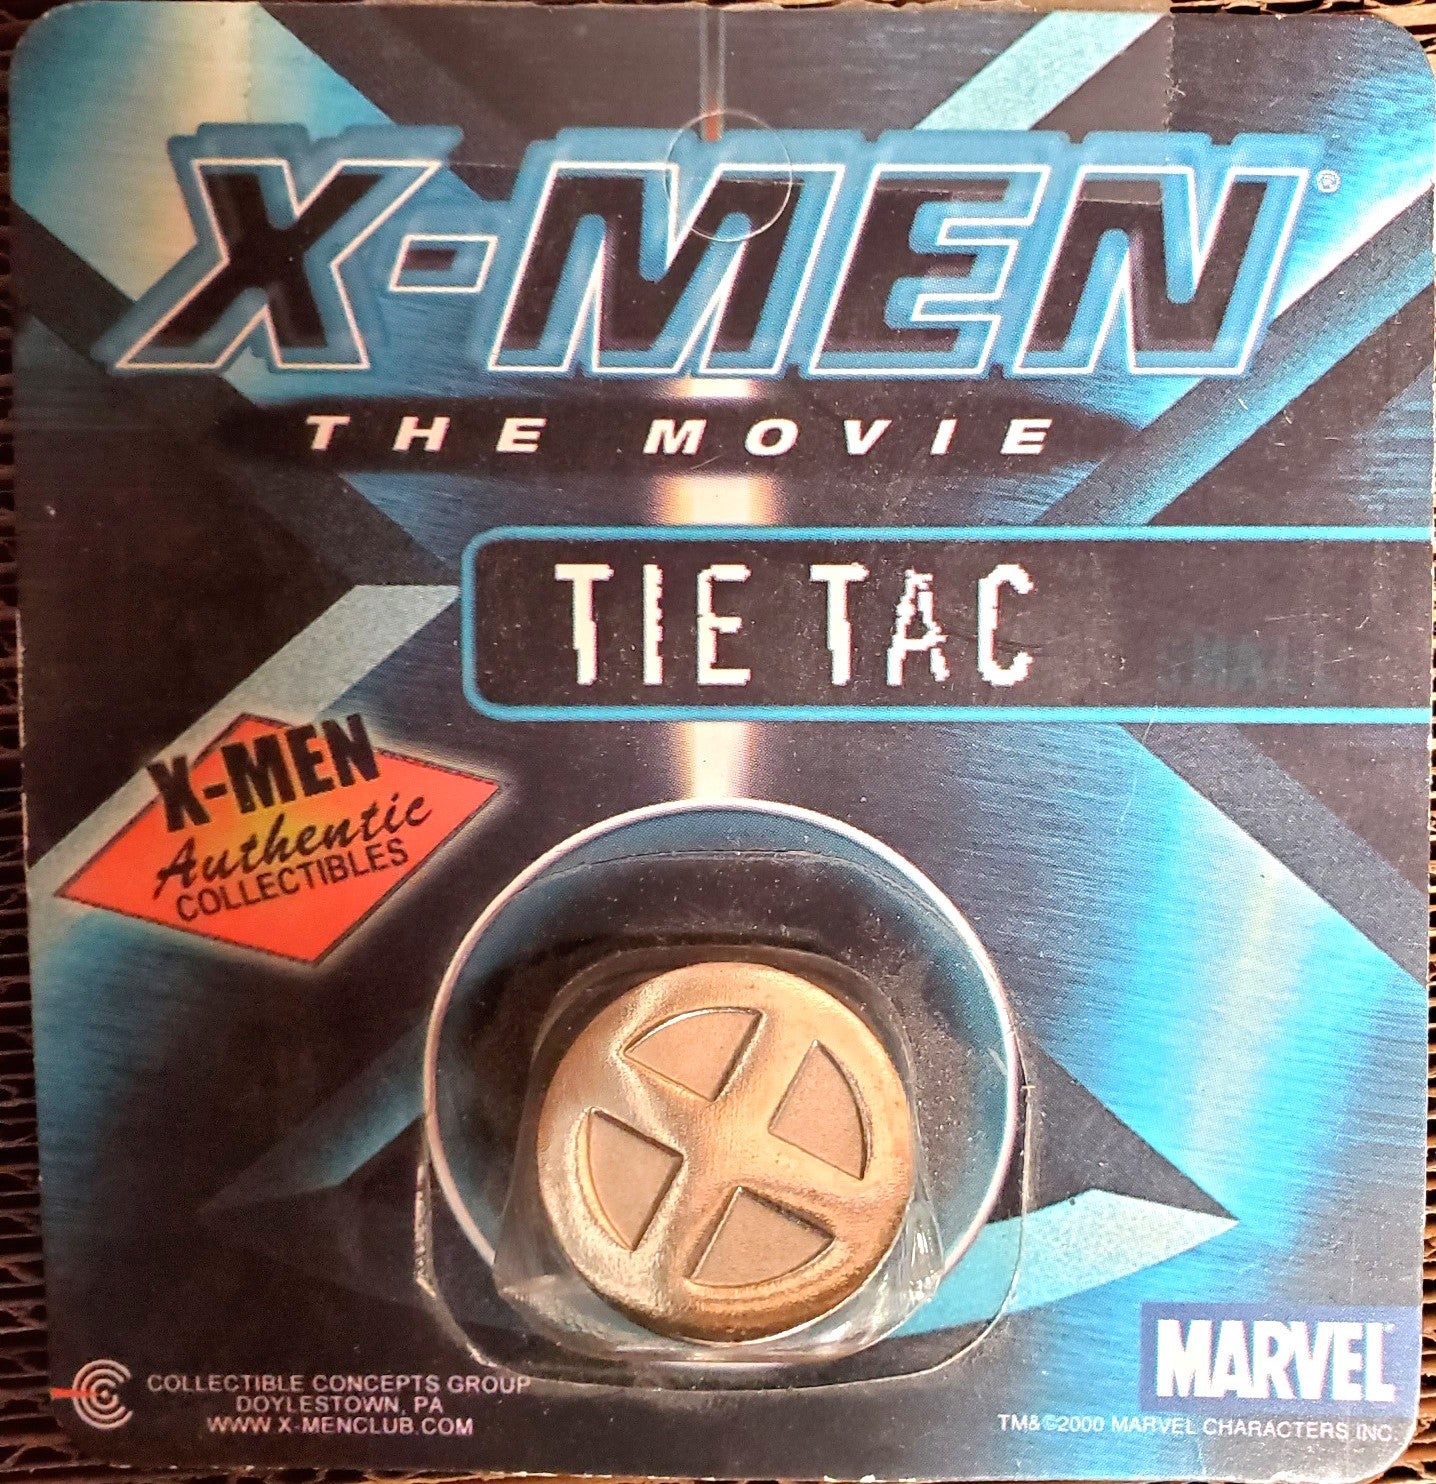 X-Men movie Tie Tac